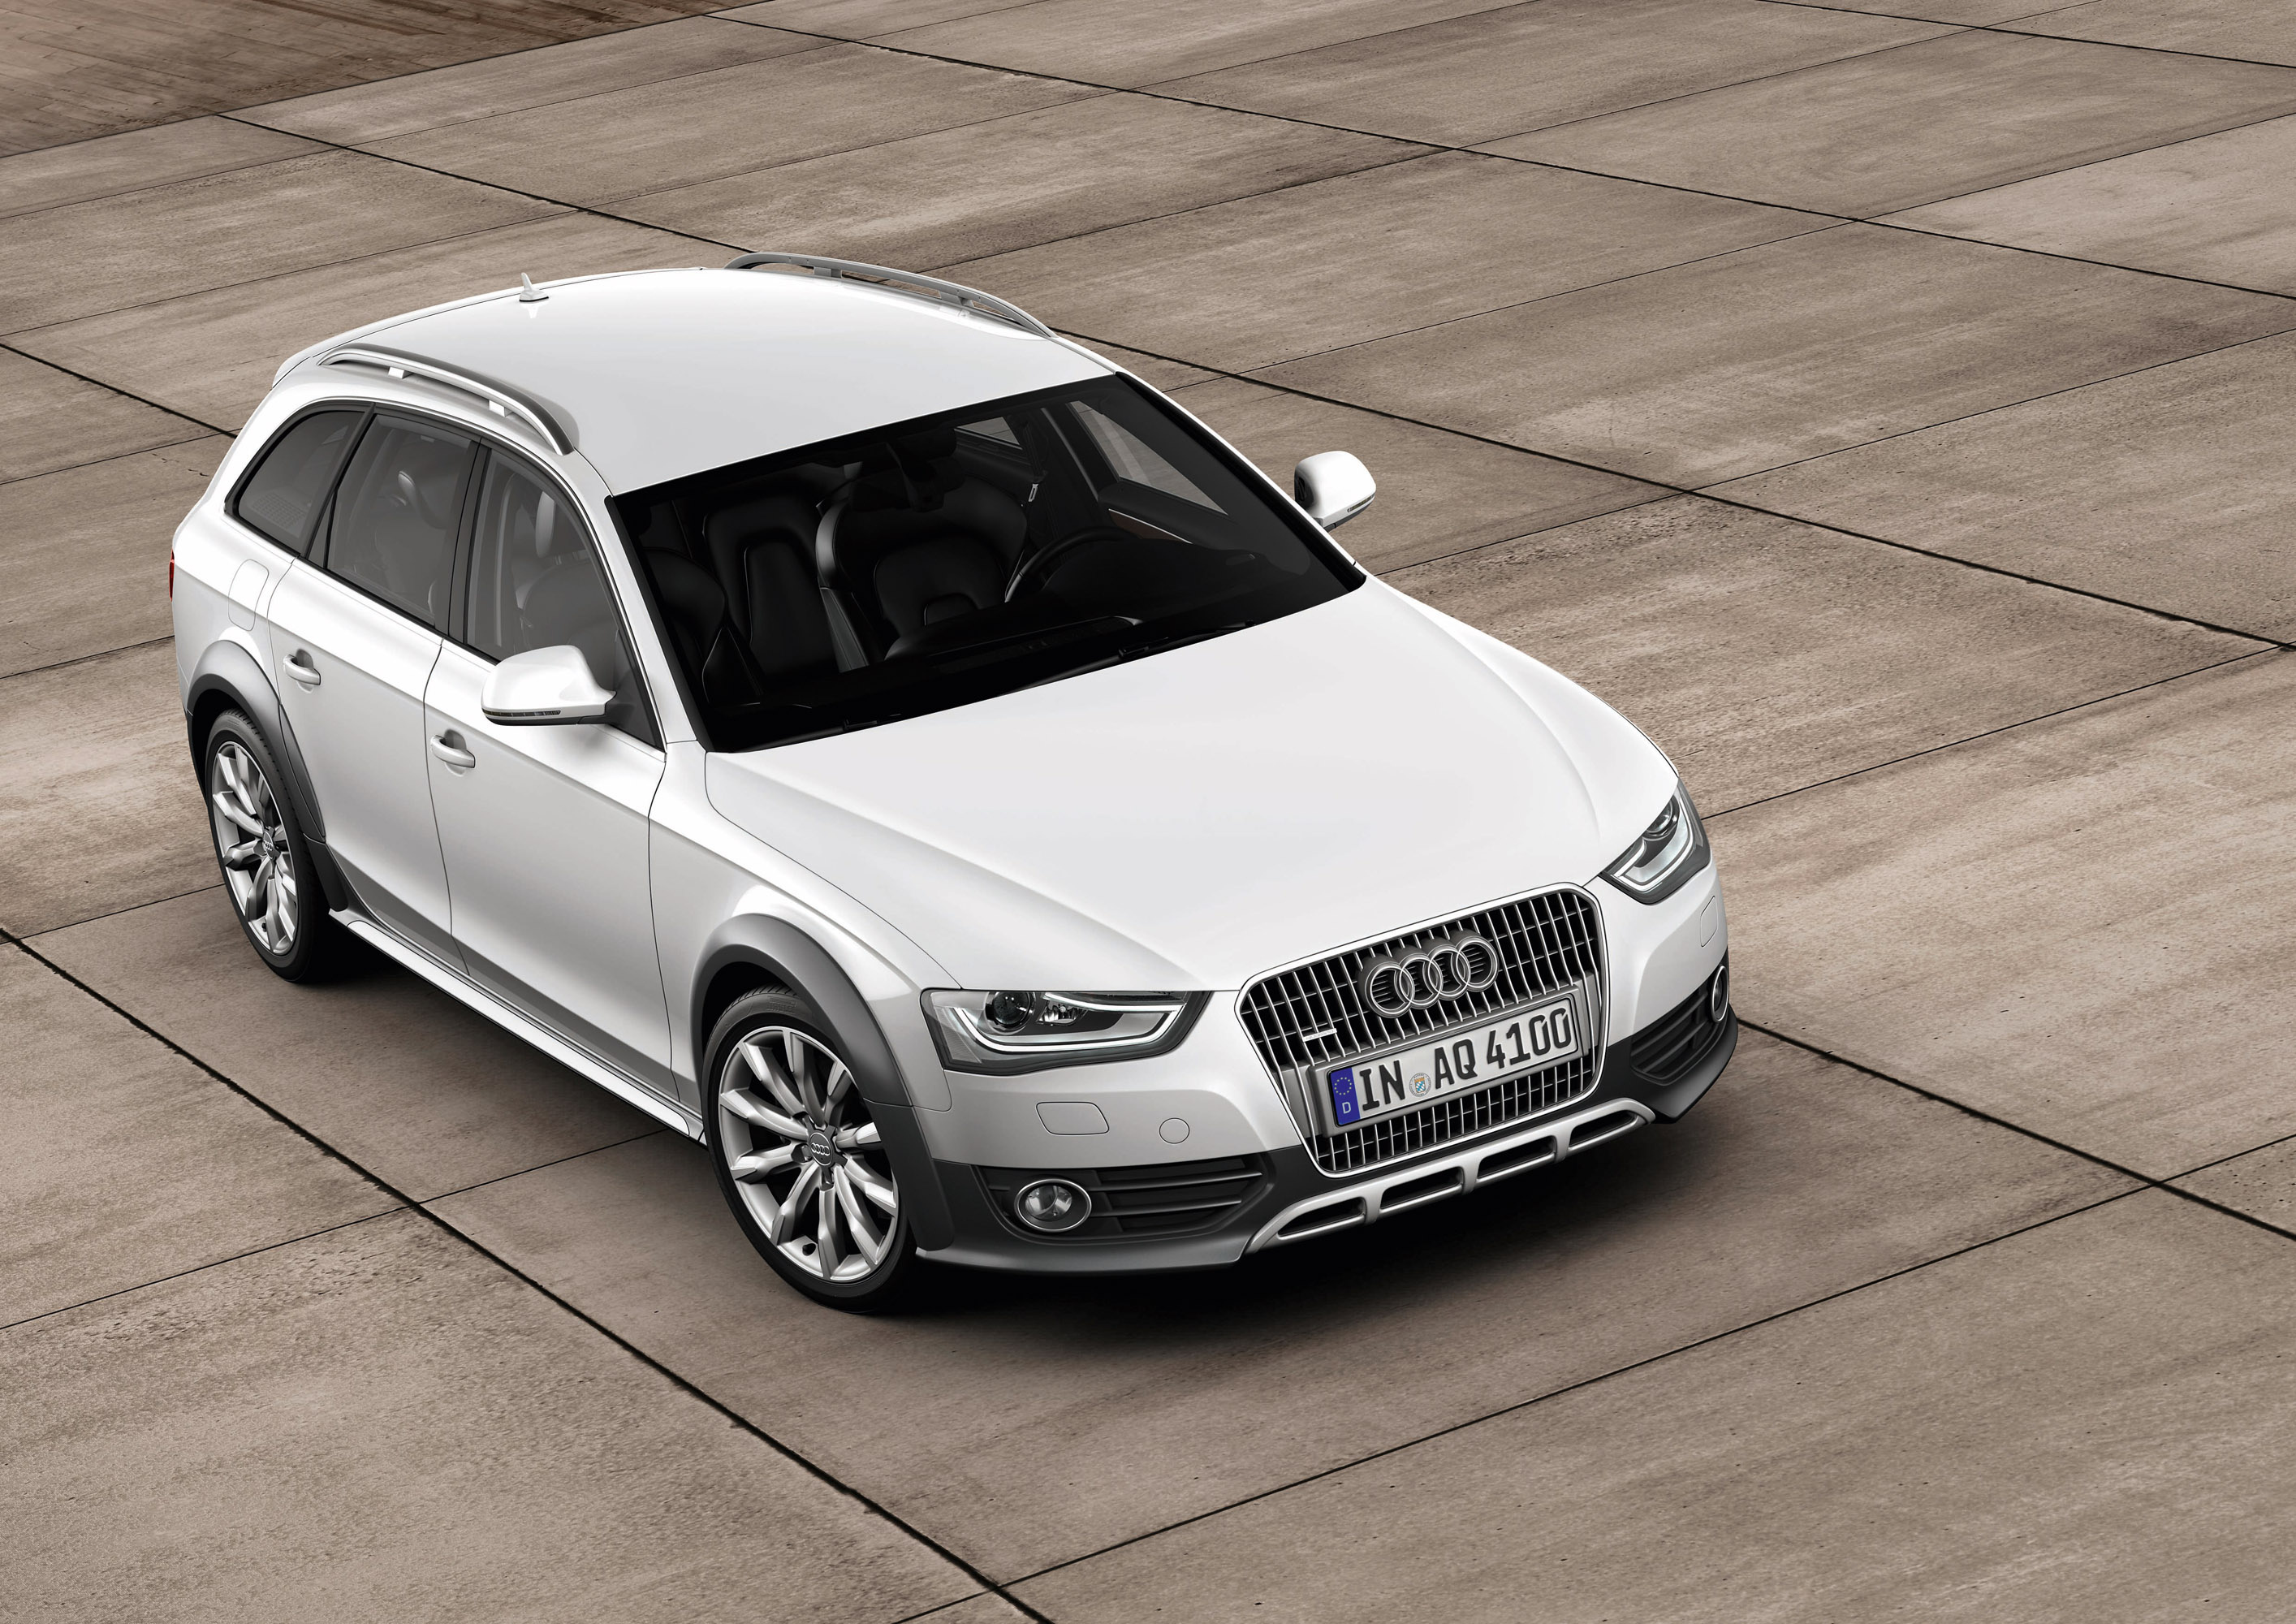 Audi A4 Allroad, Quattro power, Off-road capability, Exceptional performance, 2830x2000 HD Desktop